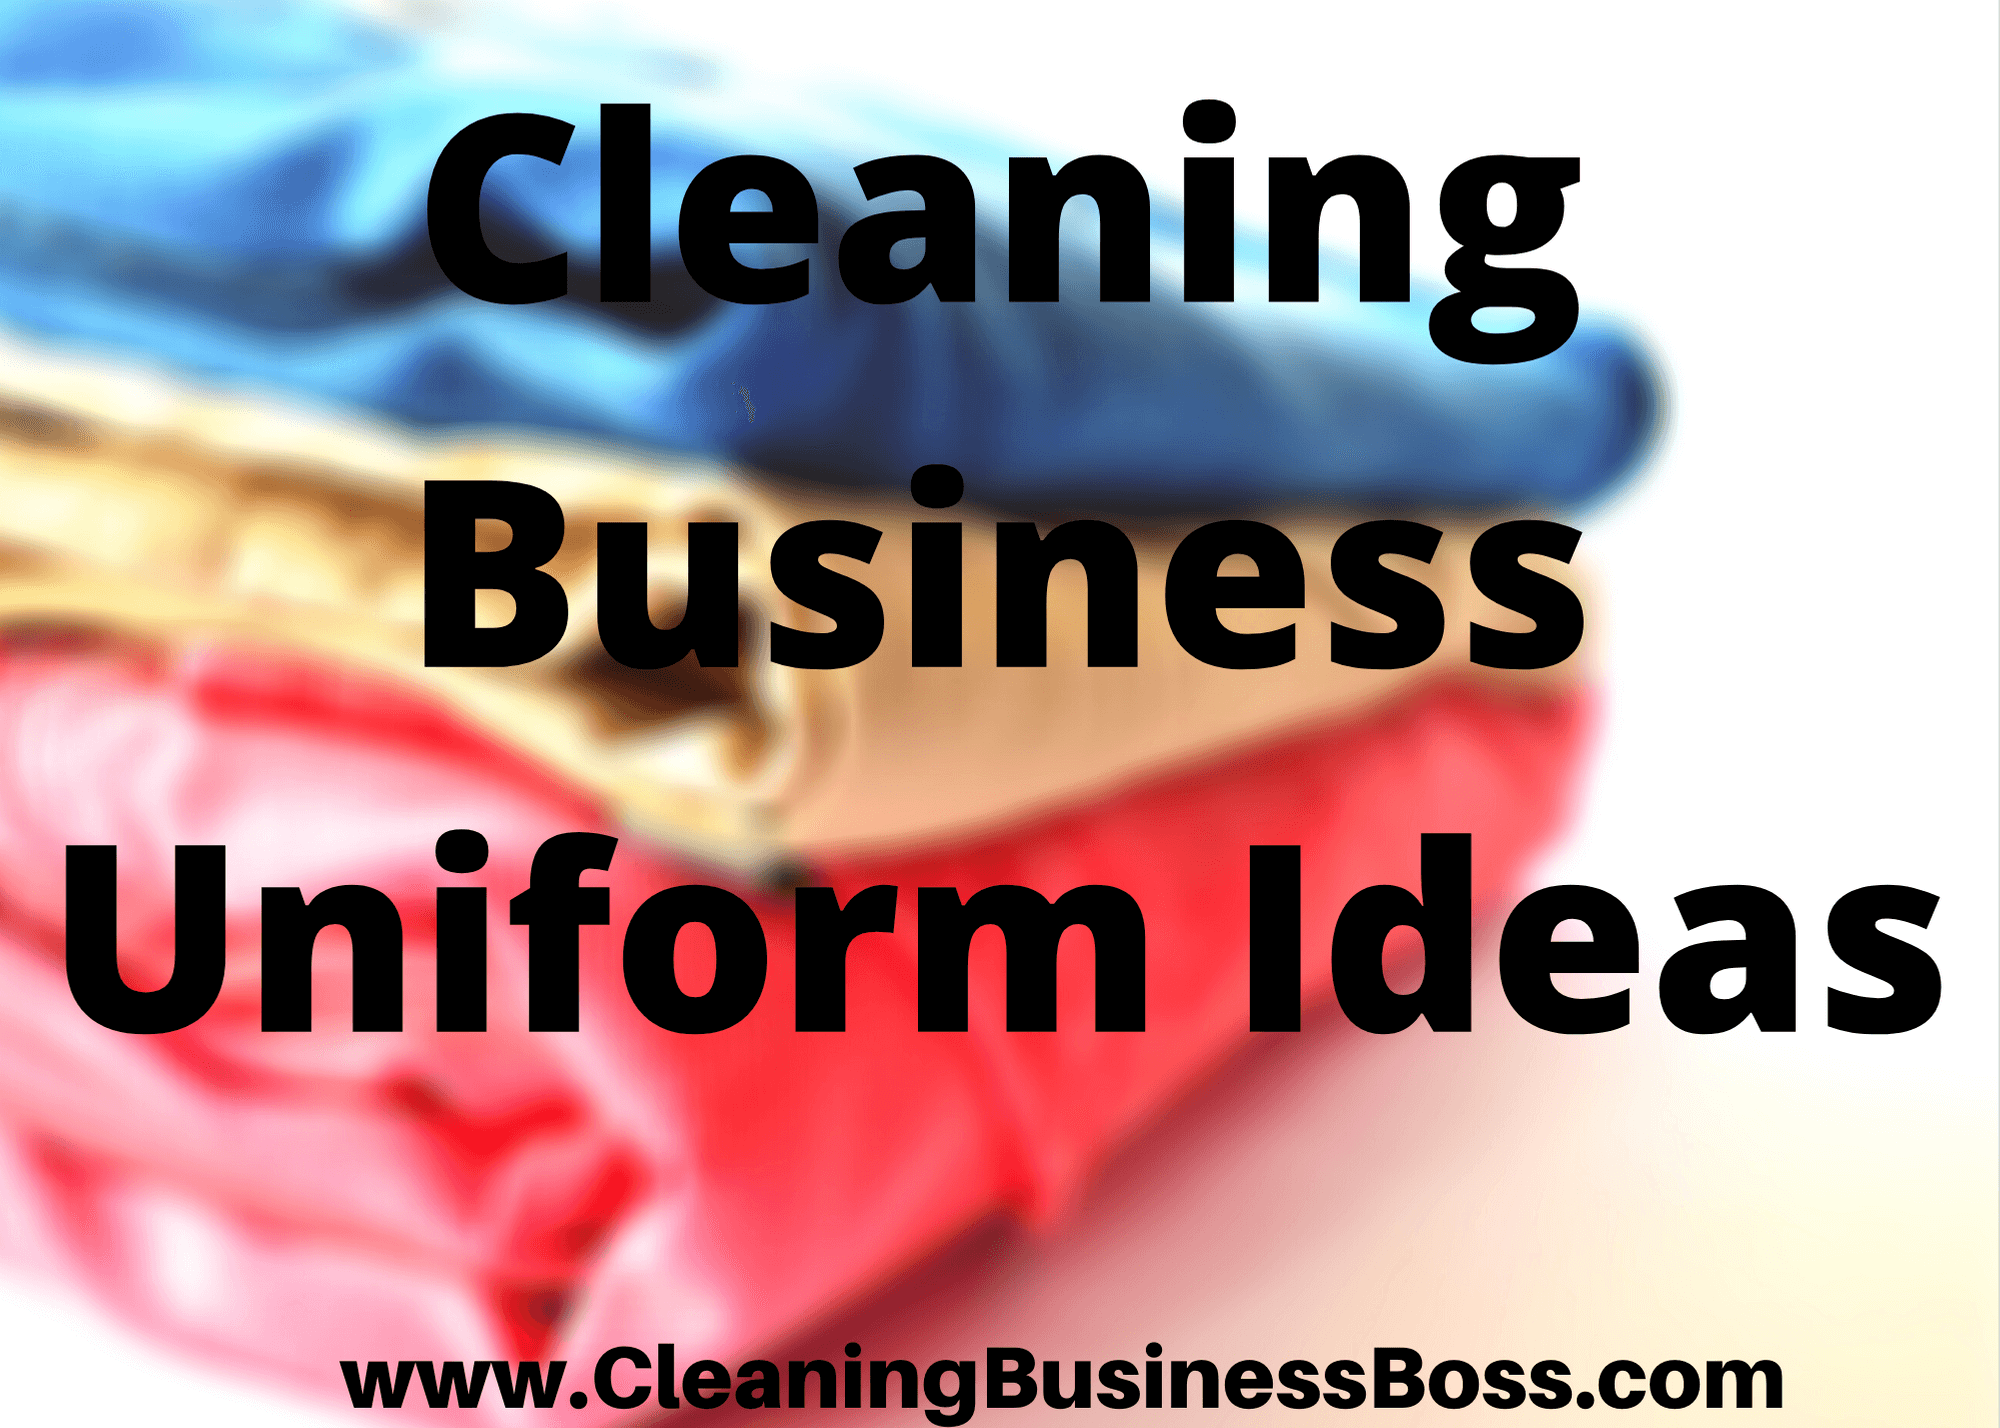 Cleaning Business Uniform Ideas